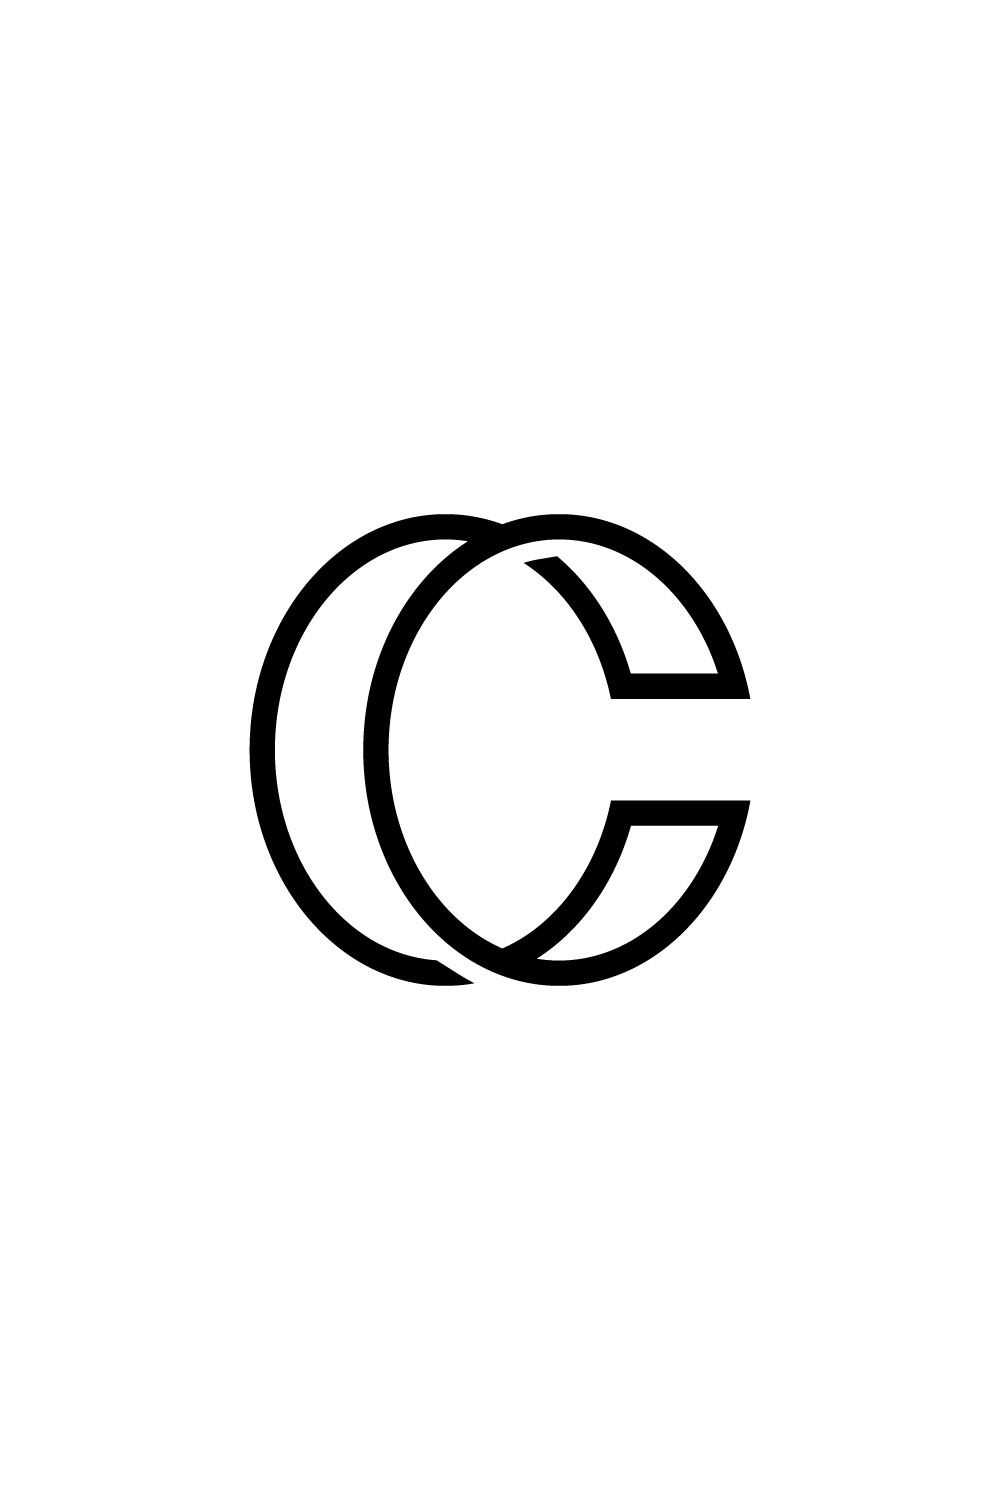 C Logo Design Pinterest image.